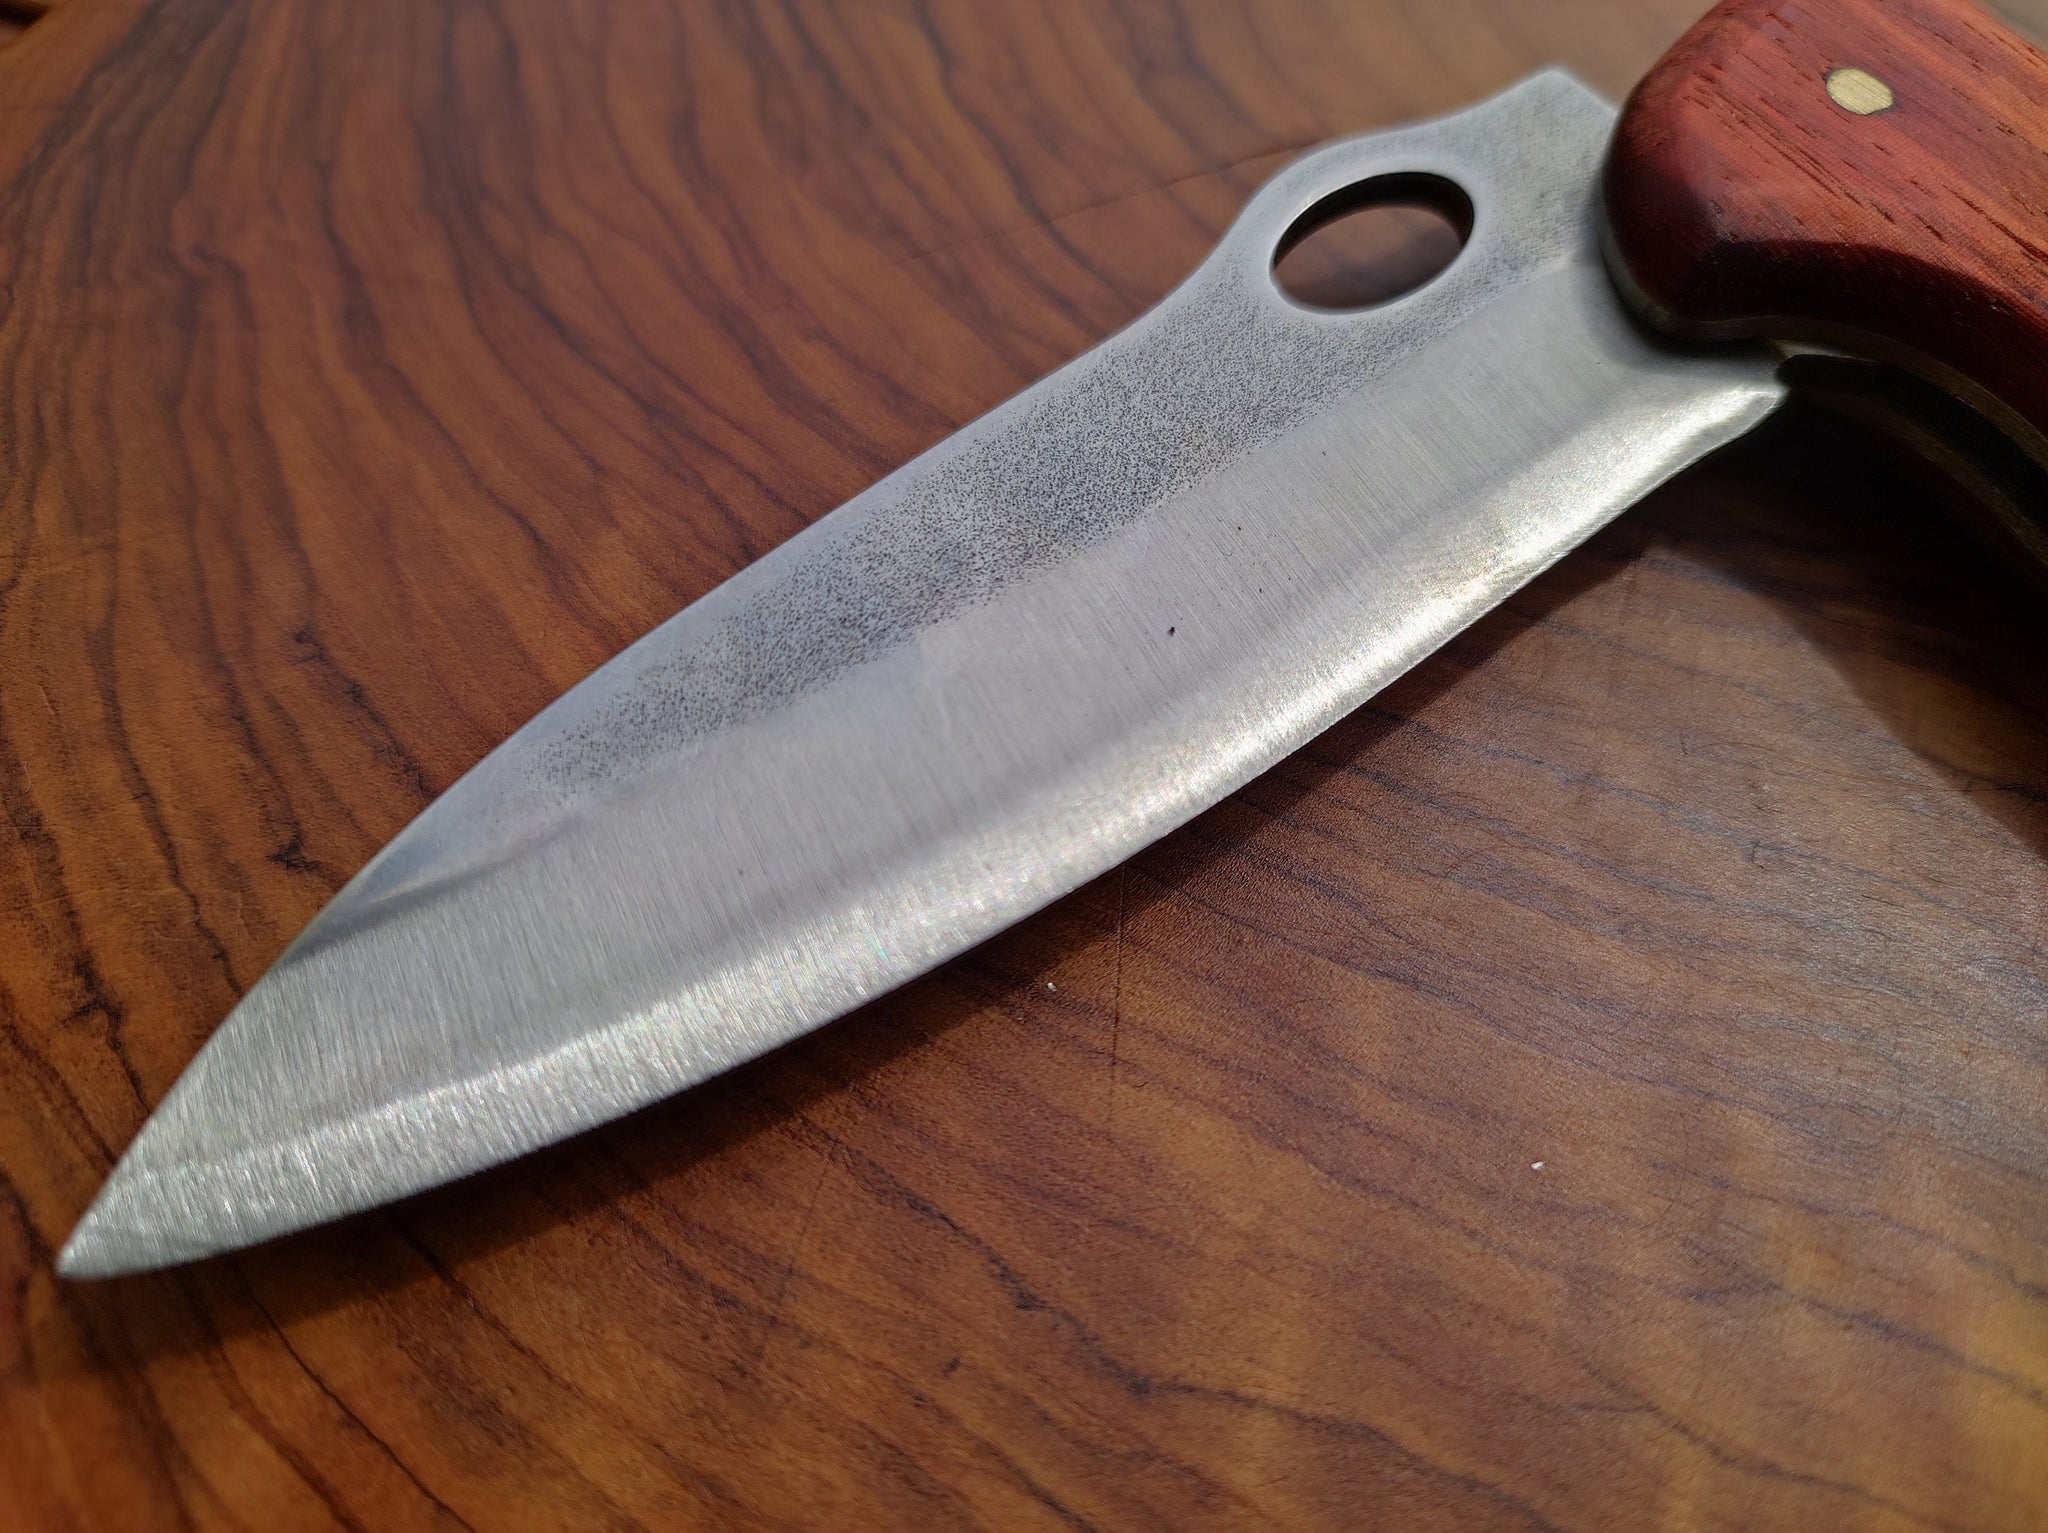 Wunderschönes Messer mit Edelholz -Padouk / Paduk- Handarbeit Outdoor Utensil Geschenk Mann Bruder Sohn Vater Sammler besonders hochwertig